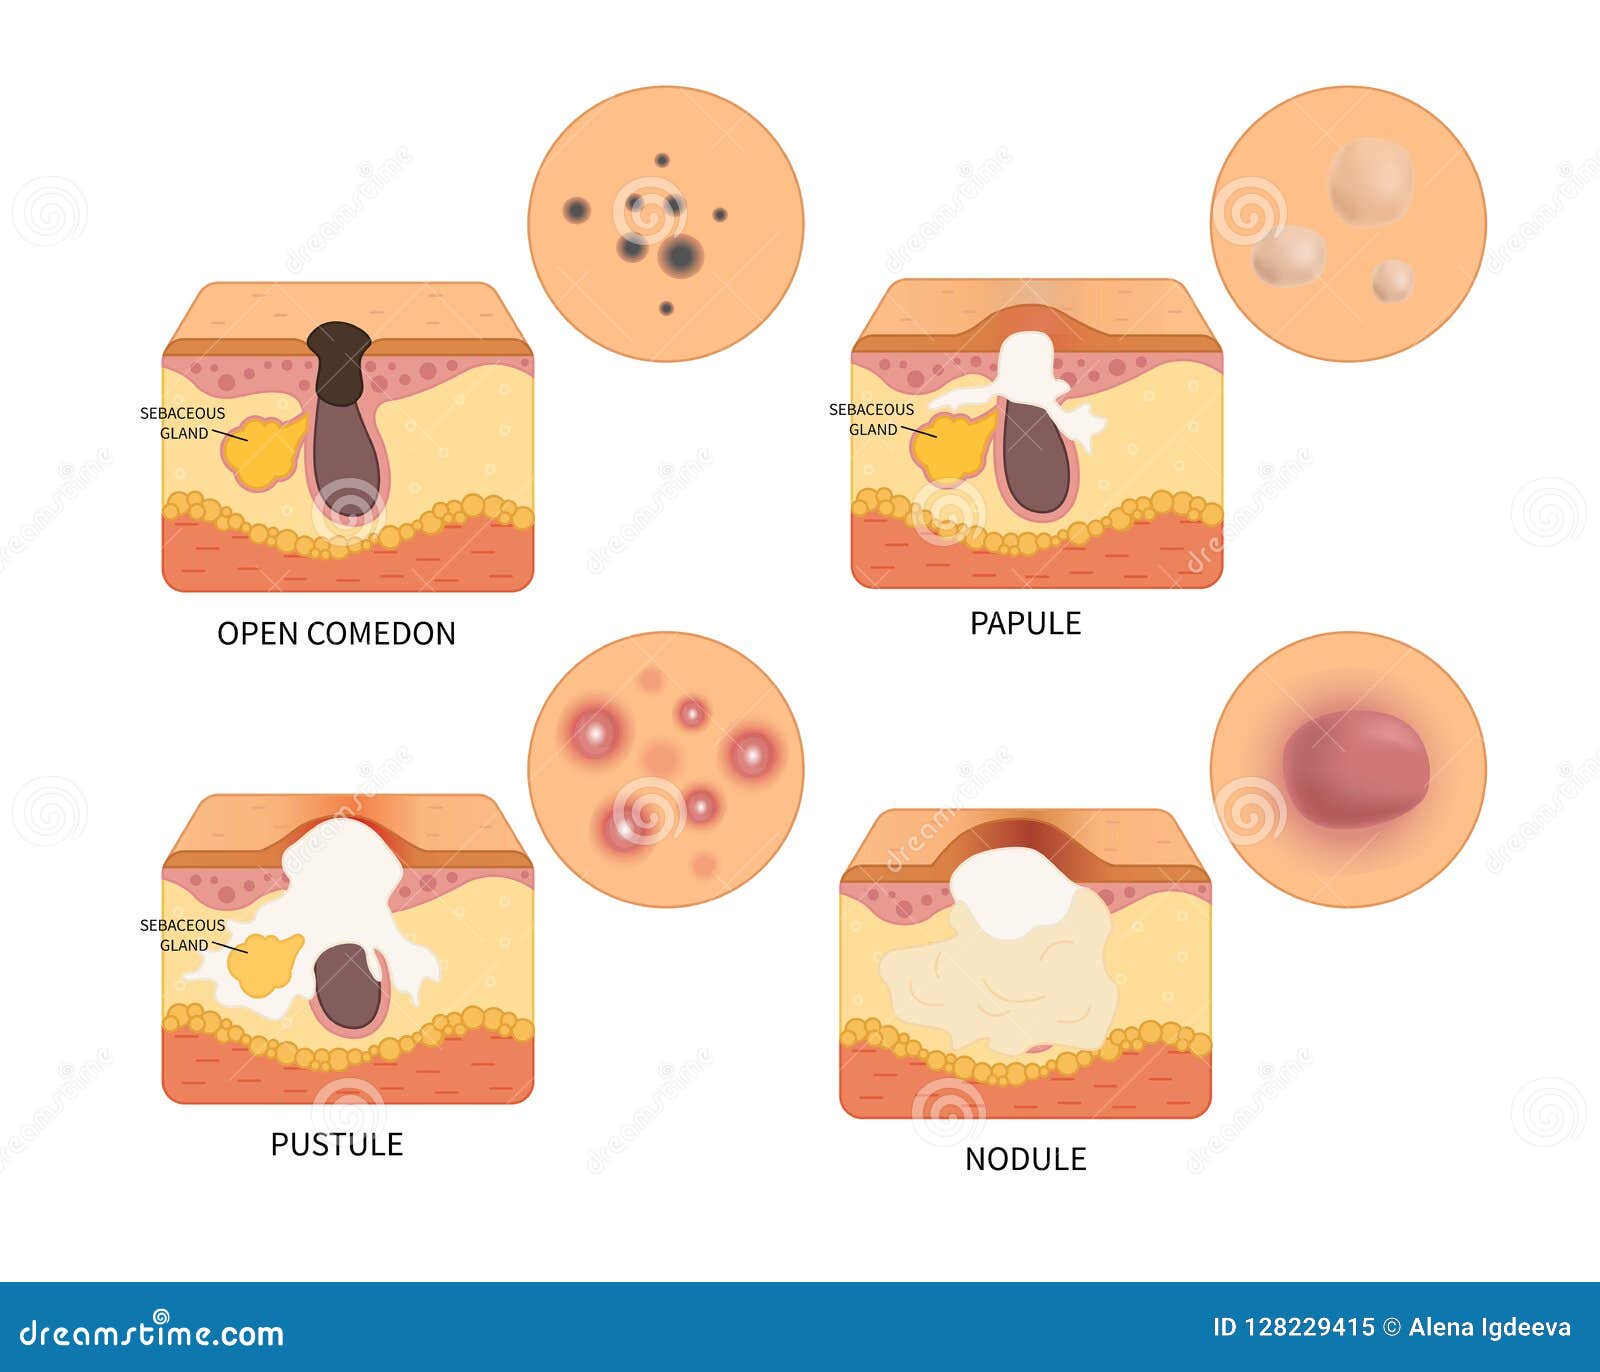 Anatomy Of A Pimple Diagram